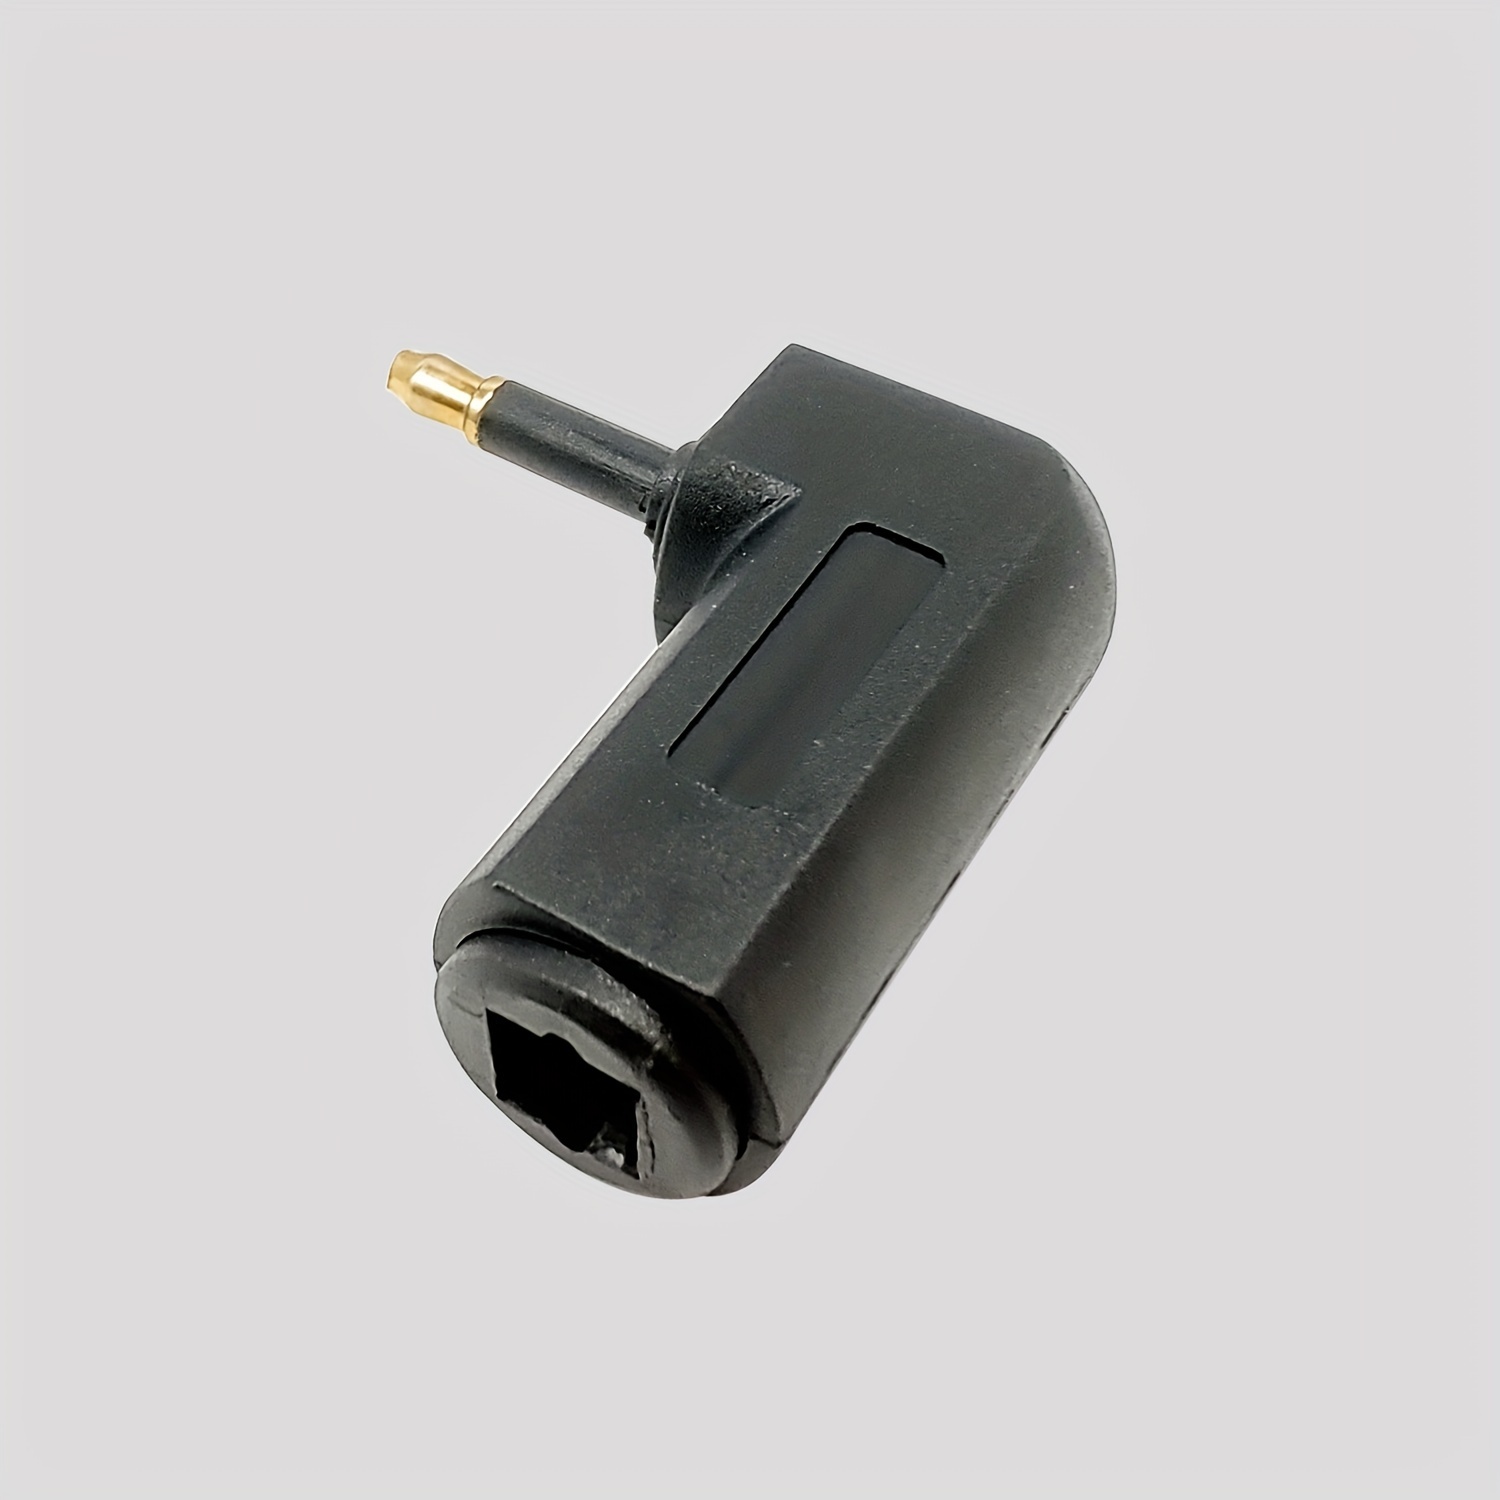 Mini cable de audio óptico digital de 3.5 mm que conecta el cable